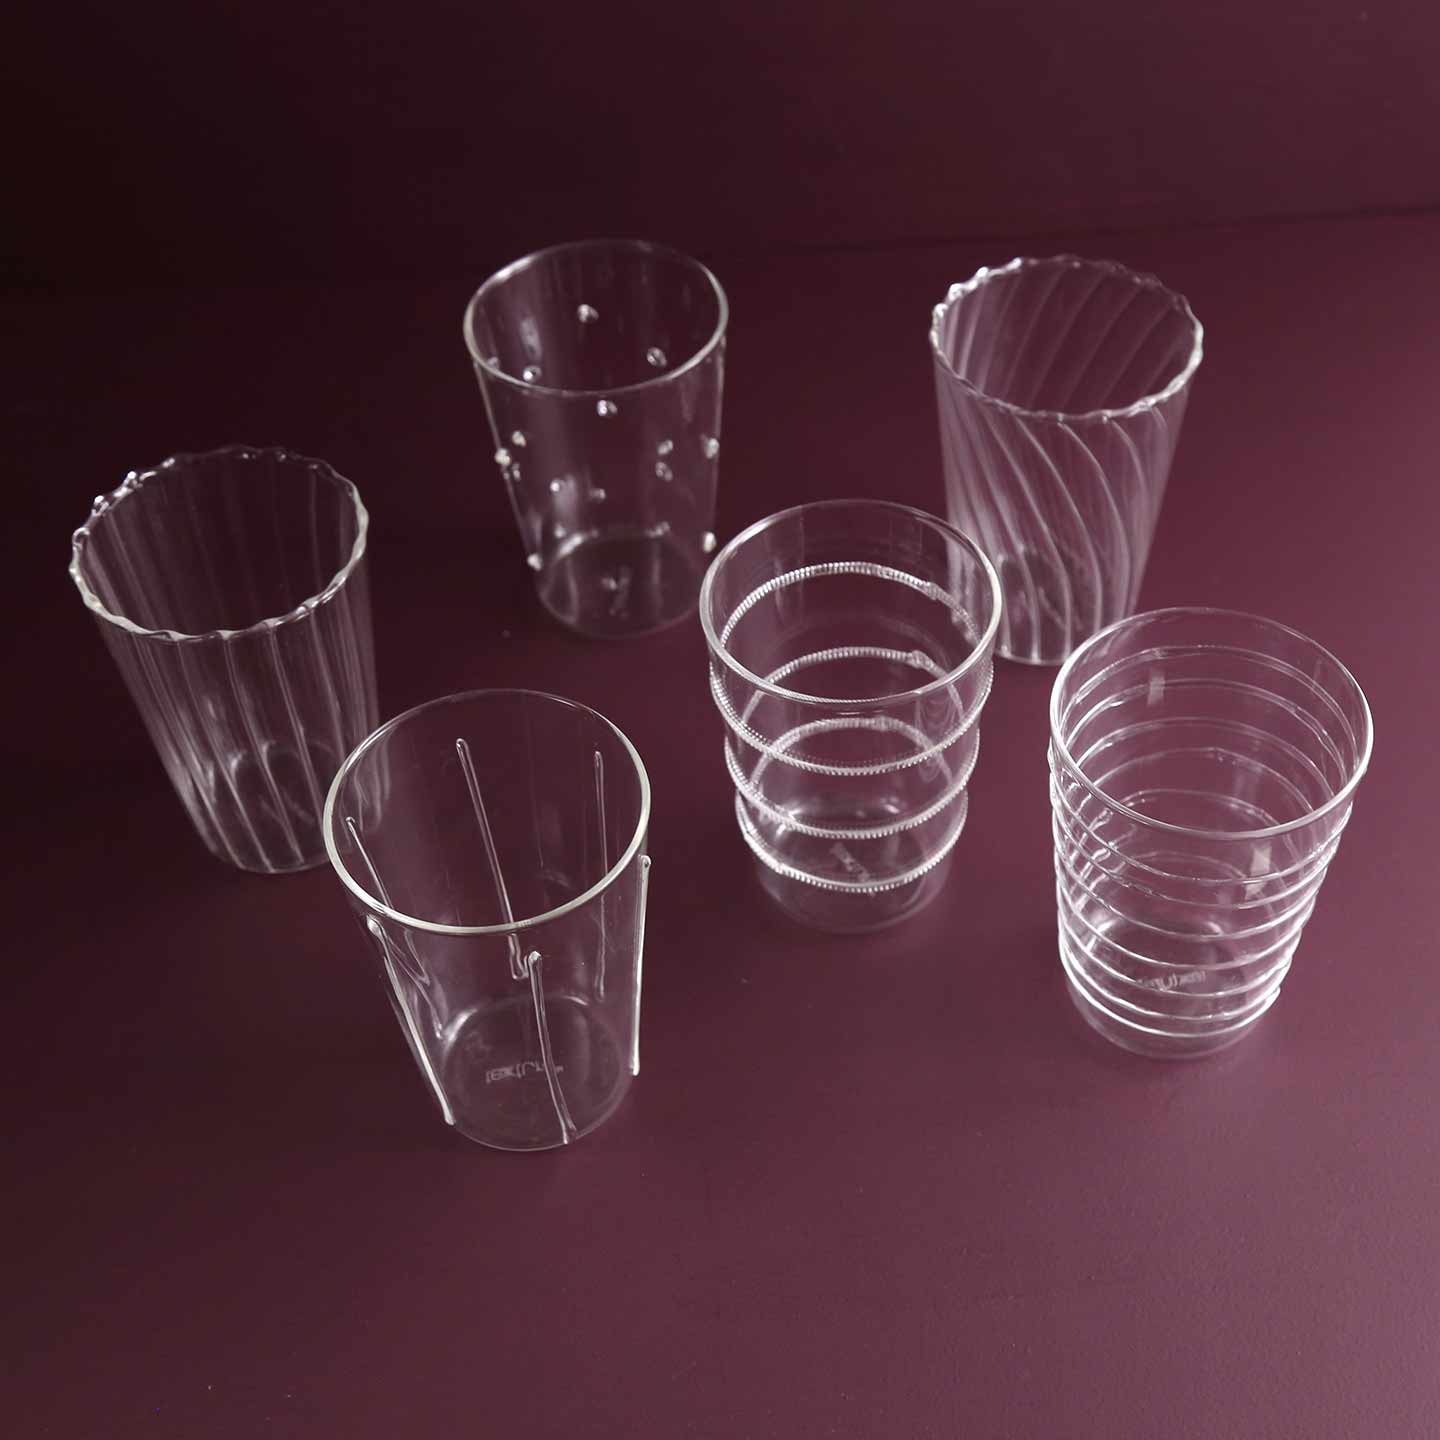 Livenza Drinking Glasses / Set of 6 Assorted + sett – One